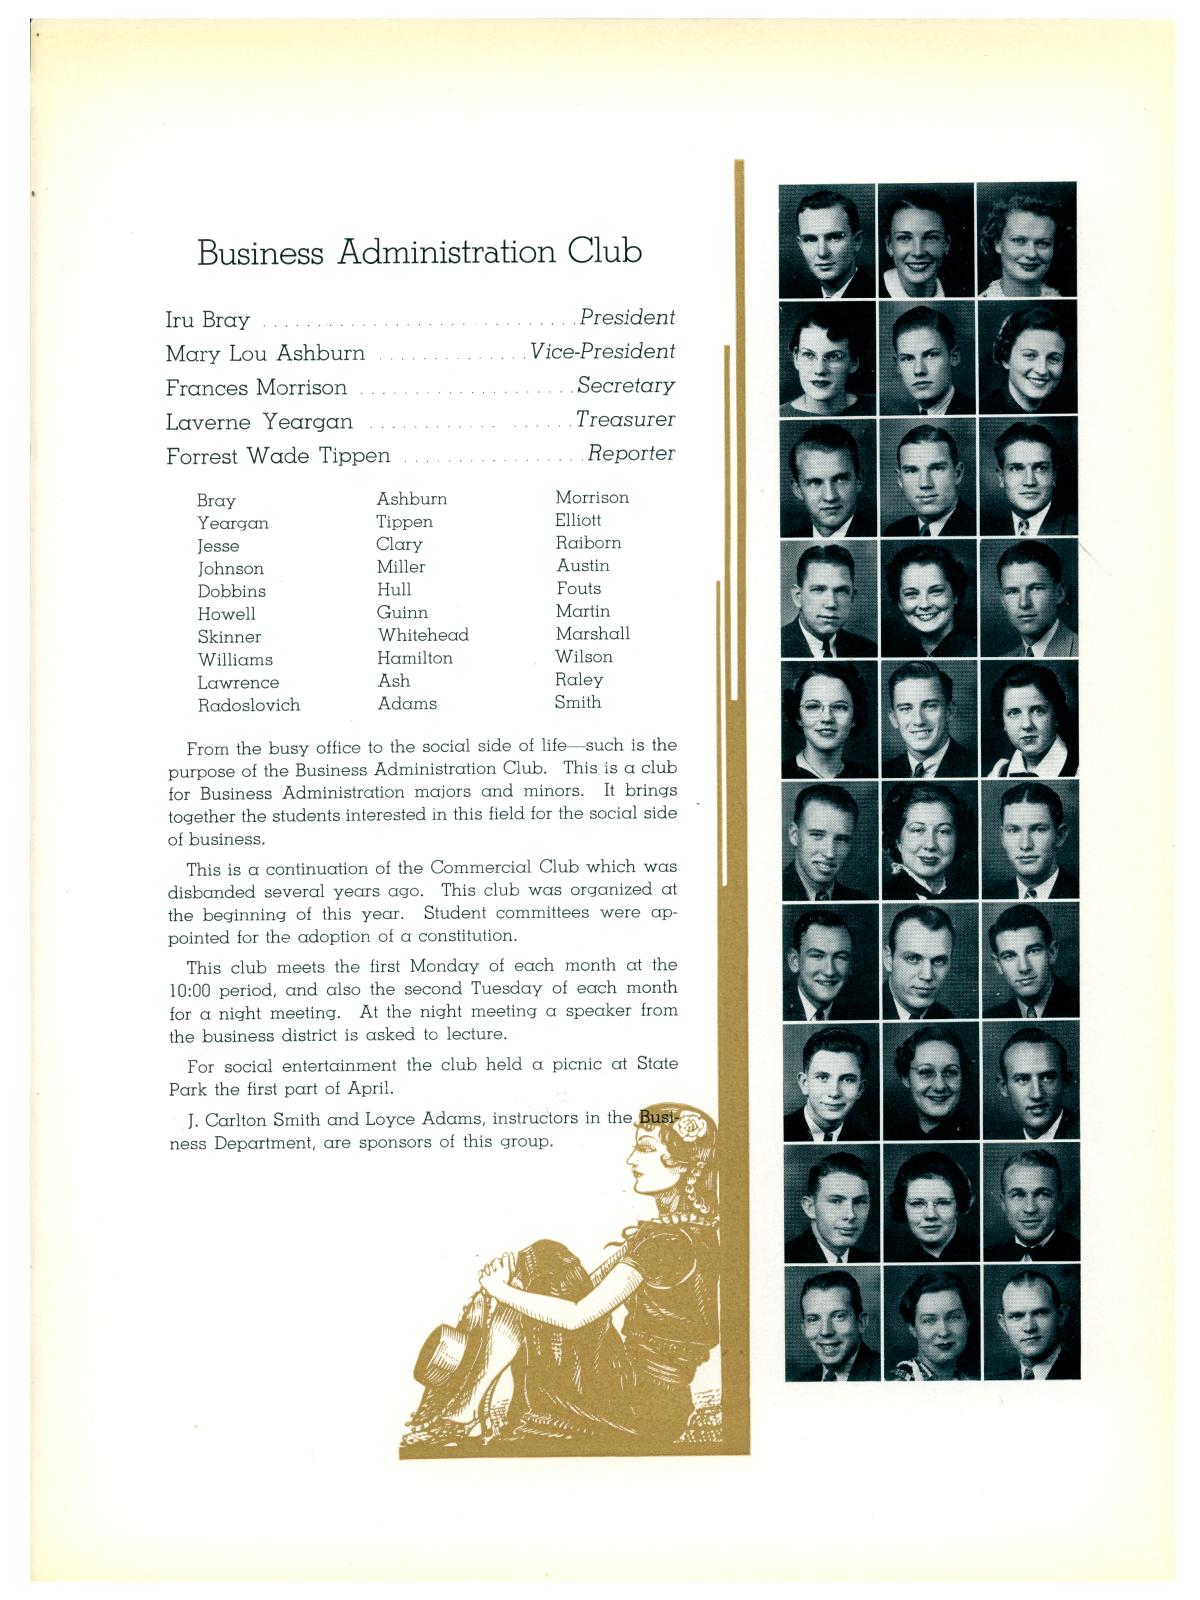 The Bronco, Yearbook of Hardin-Simmons University, 1938
                                                
                                                    202
                                                